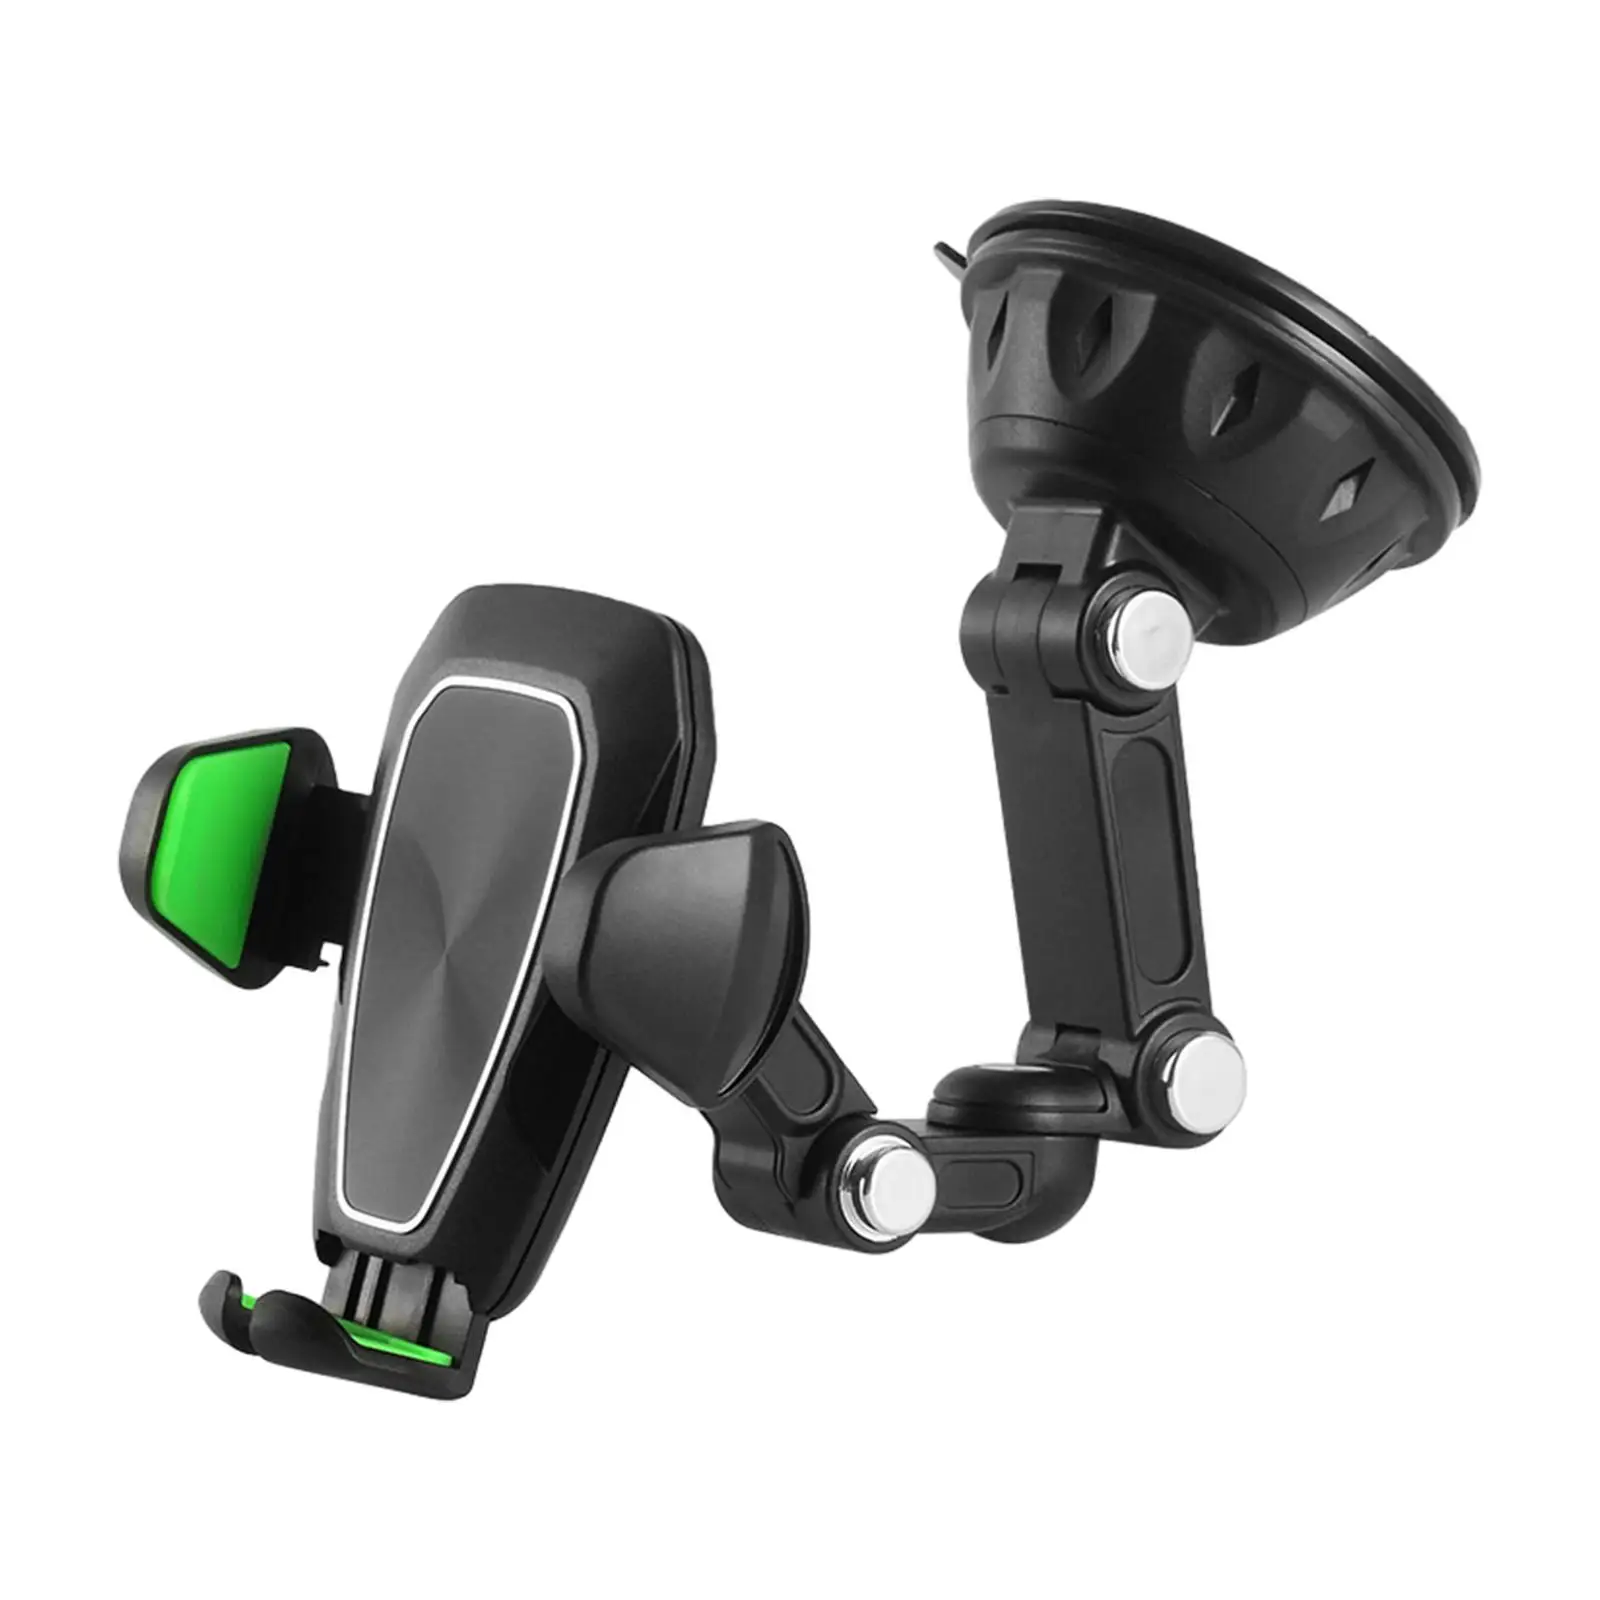 Car Mount Phone Holder, Phone Mount, Telescopic Arm Universal Durable Mobile Phone Bracket, for Car Dashboard Windshield